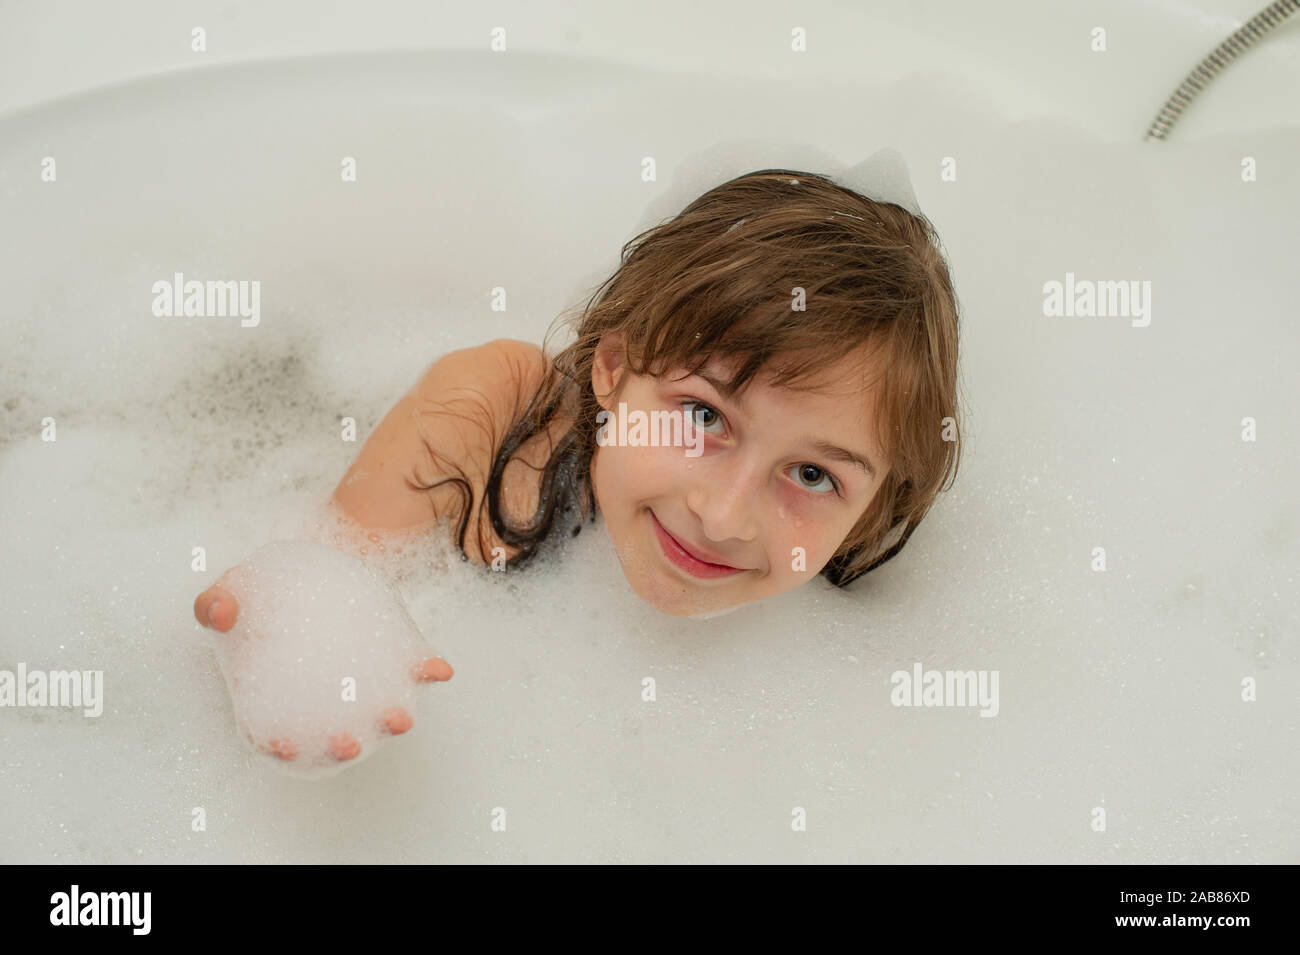 Young girl inside the bath. A little girl bathes in a bathtub with foam ...